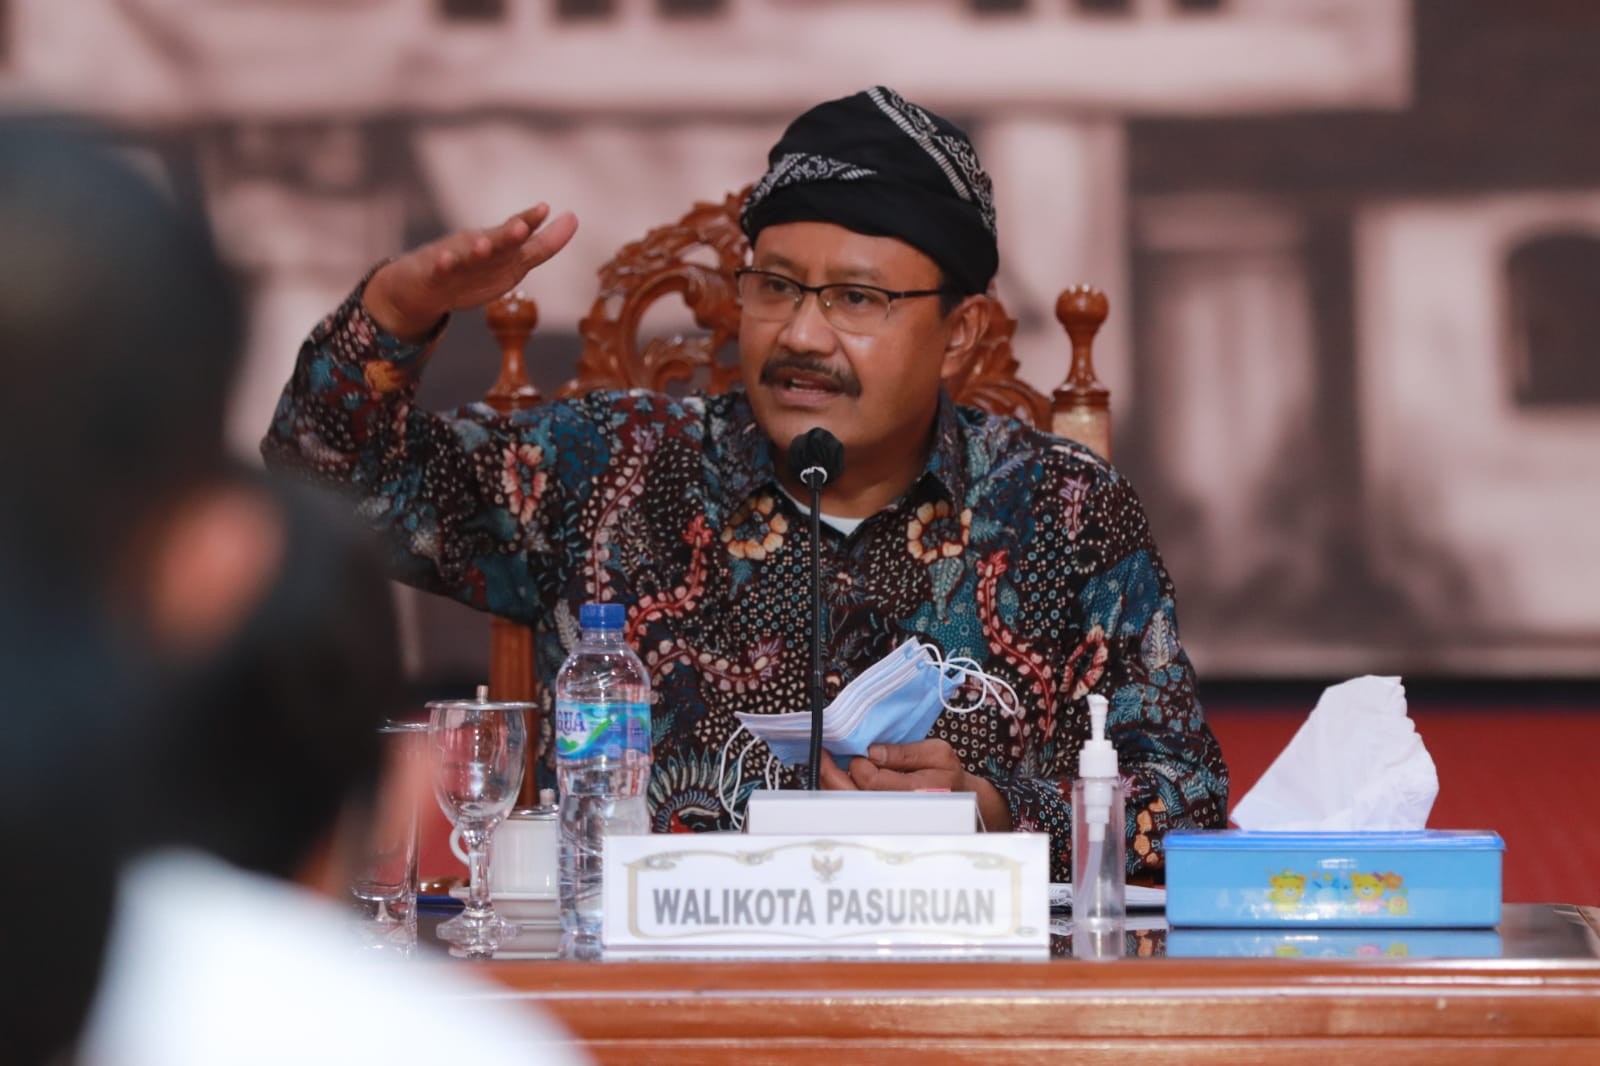 Walikota Pasuruan, Saifullah Yusuf atau Gus Ipul bakal gelar Liga Tarkam pertama di Indonesia. (Foto: Dok. Dinas Kominfo Kota Pasuruan)